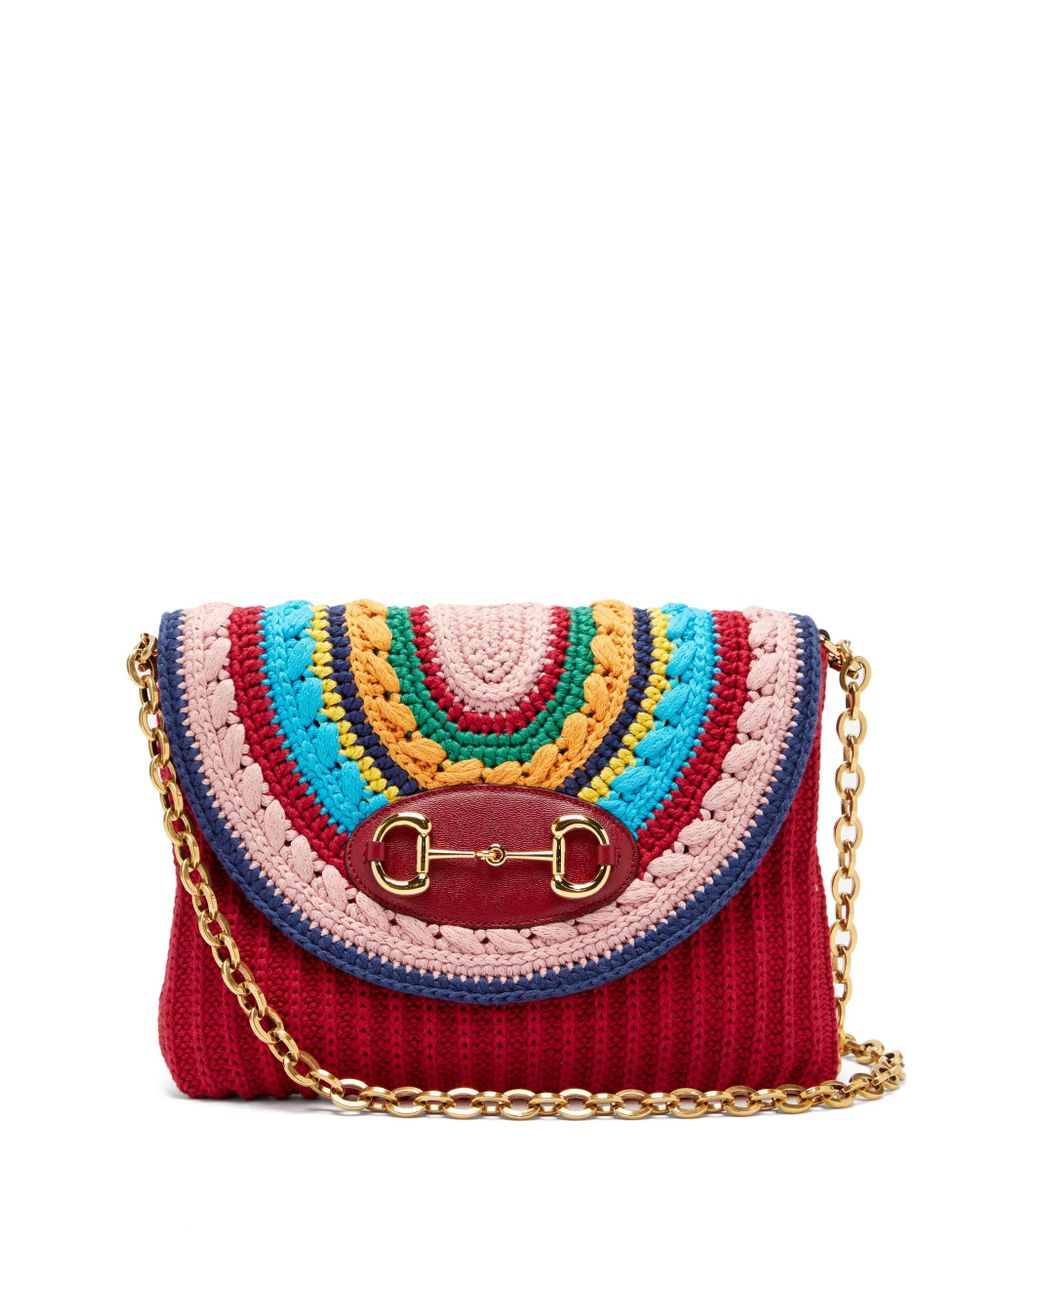 Gucci Horsebit 1955 Crochet And Knit Cross-body Bag in Red | Lyst Australia